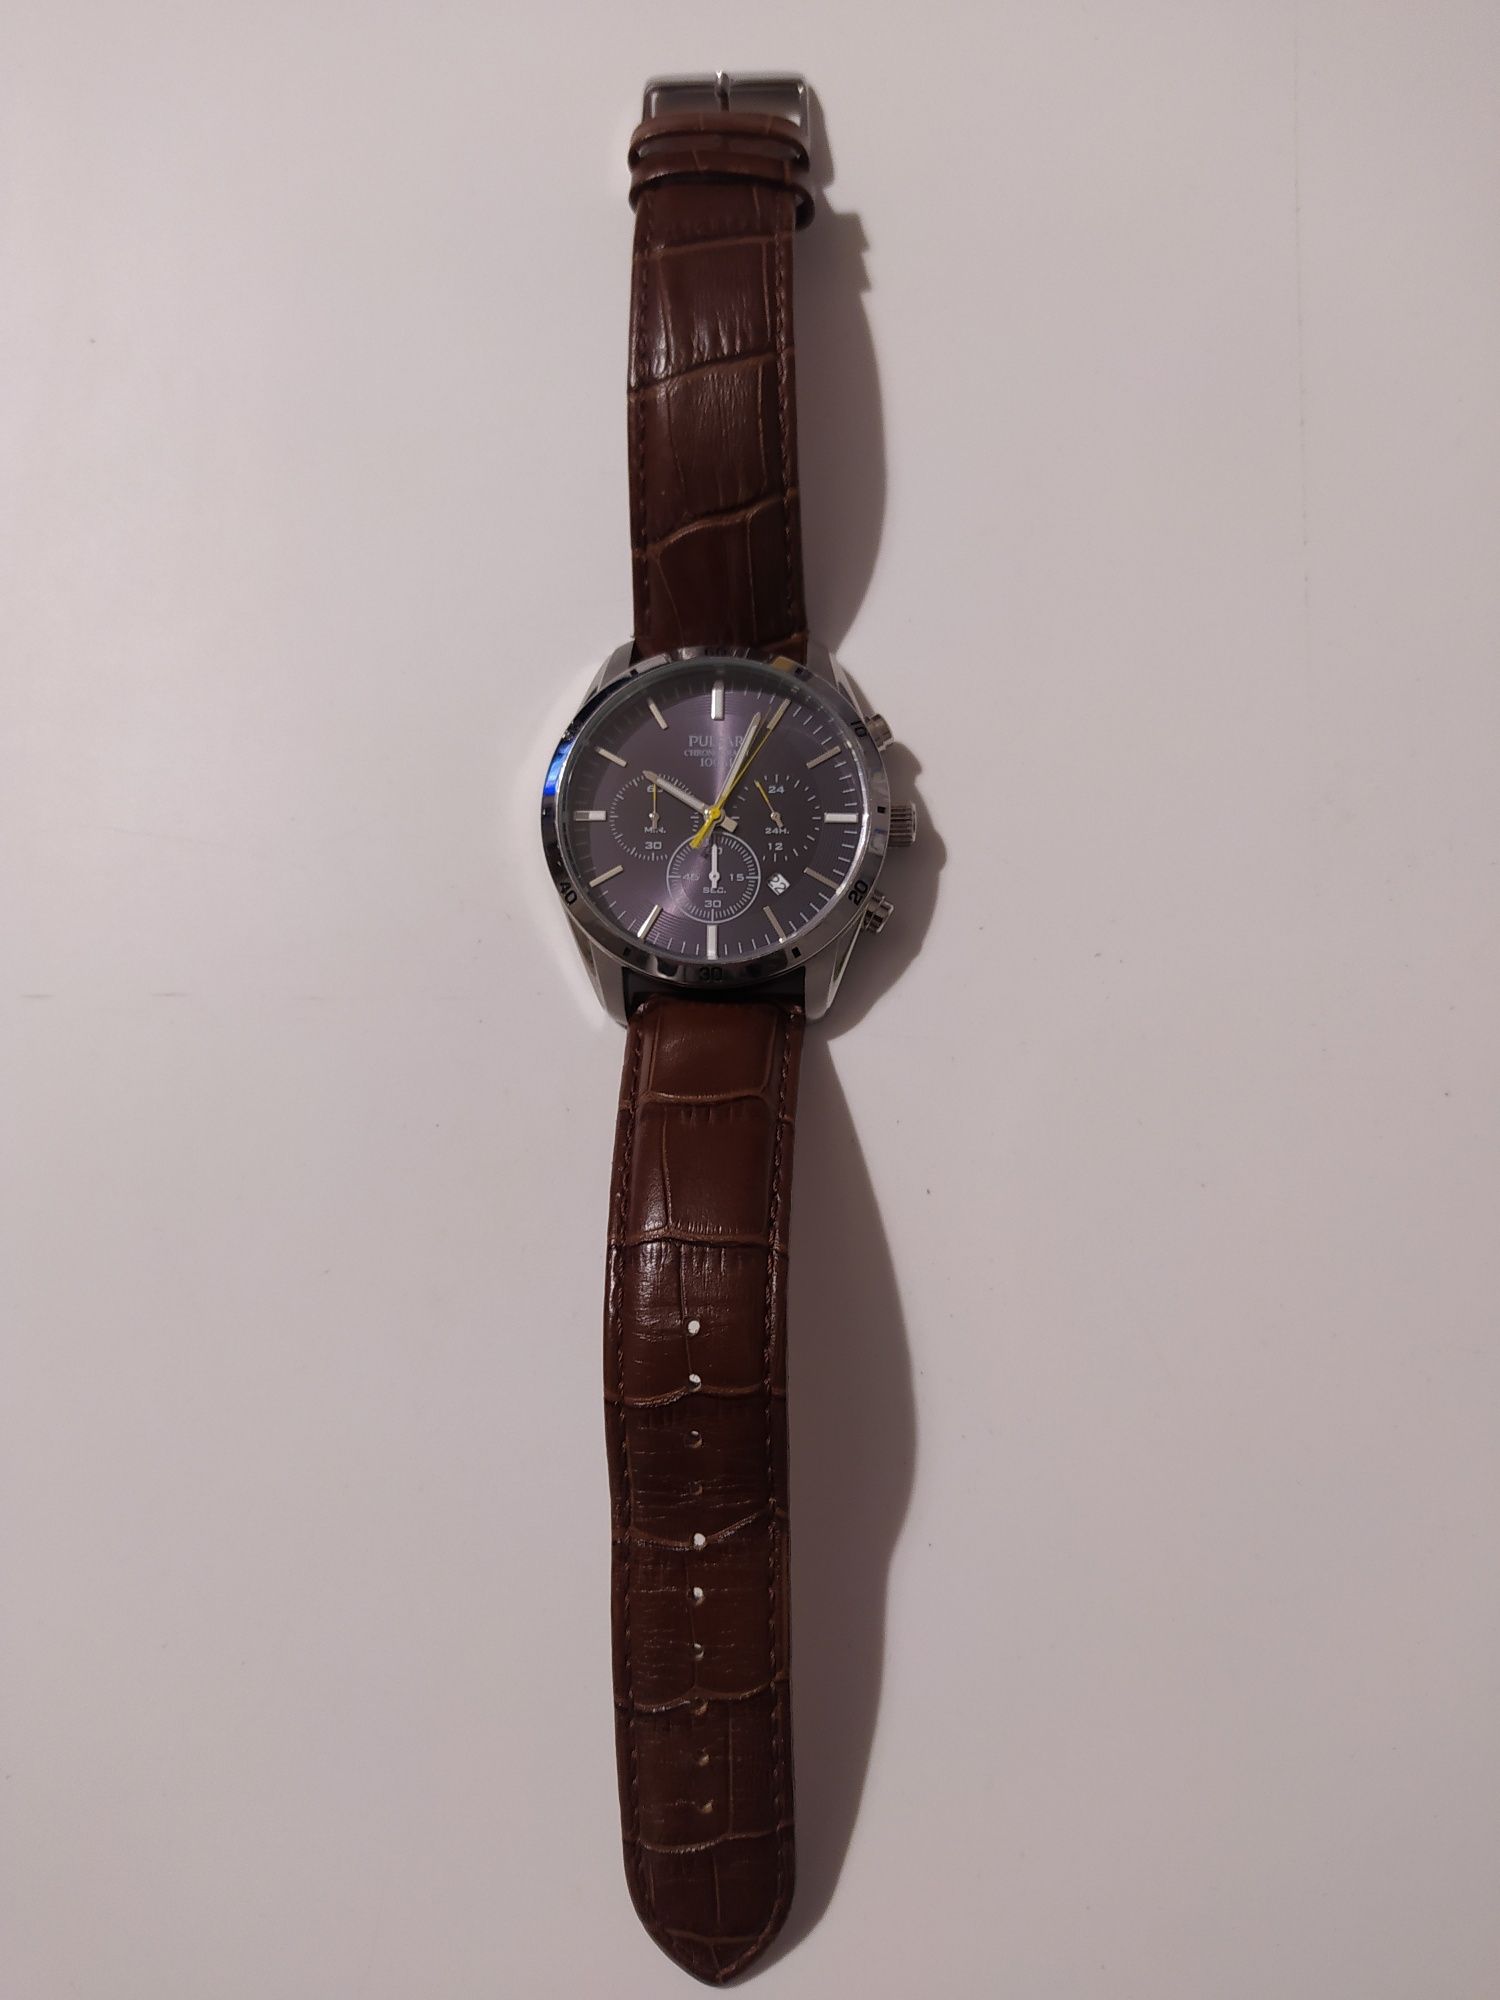 Oryginalny zegarek męski Pulsar pt3738